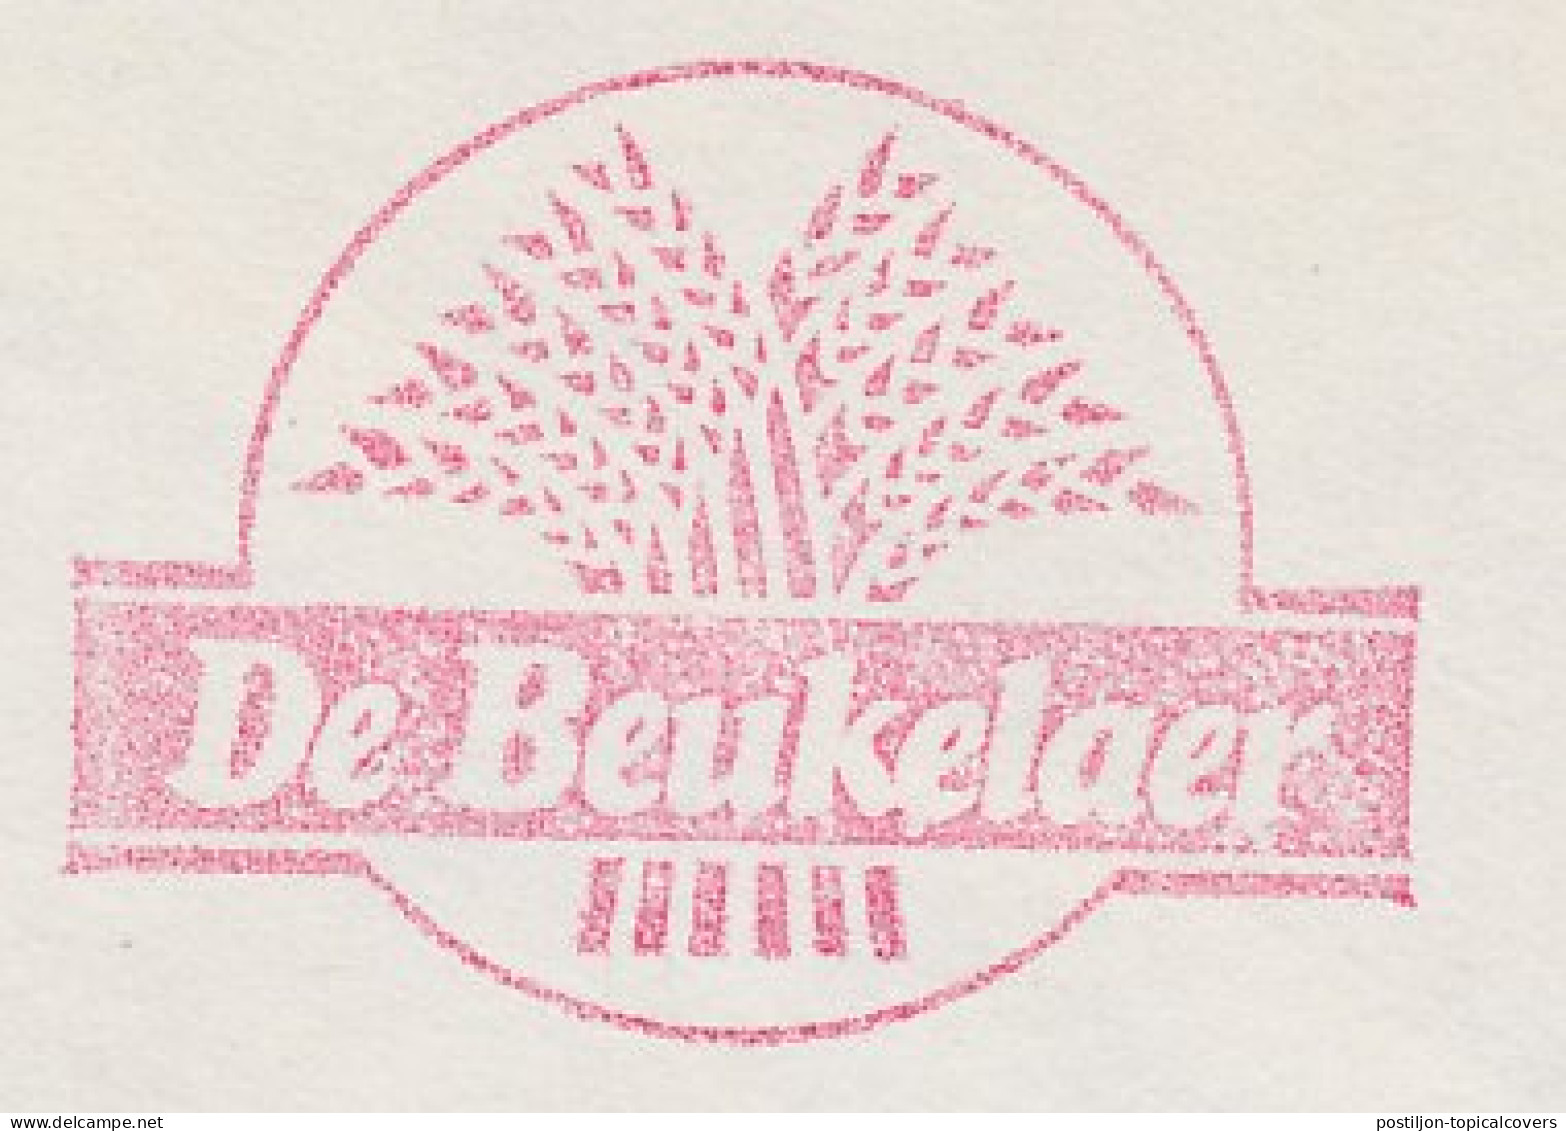 Meter Cover Belgium 1983 Sheaf Of Corn - De Beukelaer - Agriculture